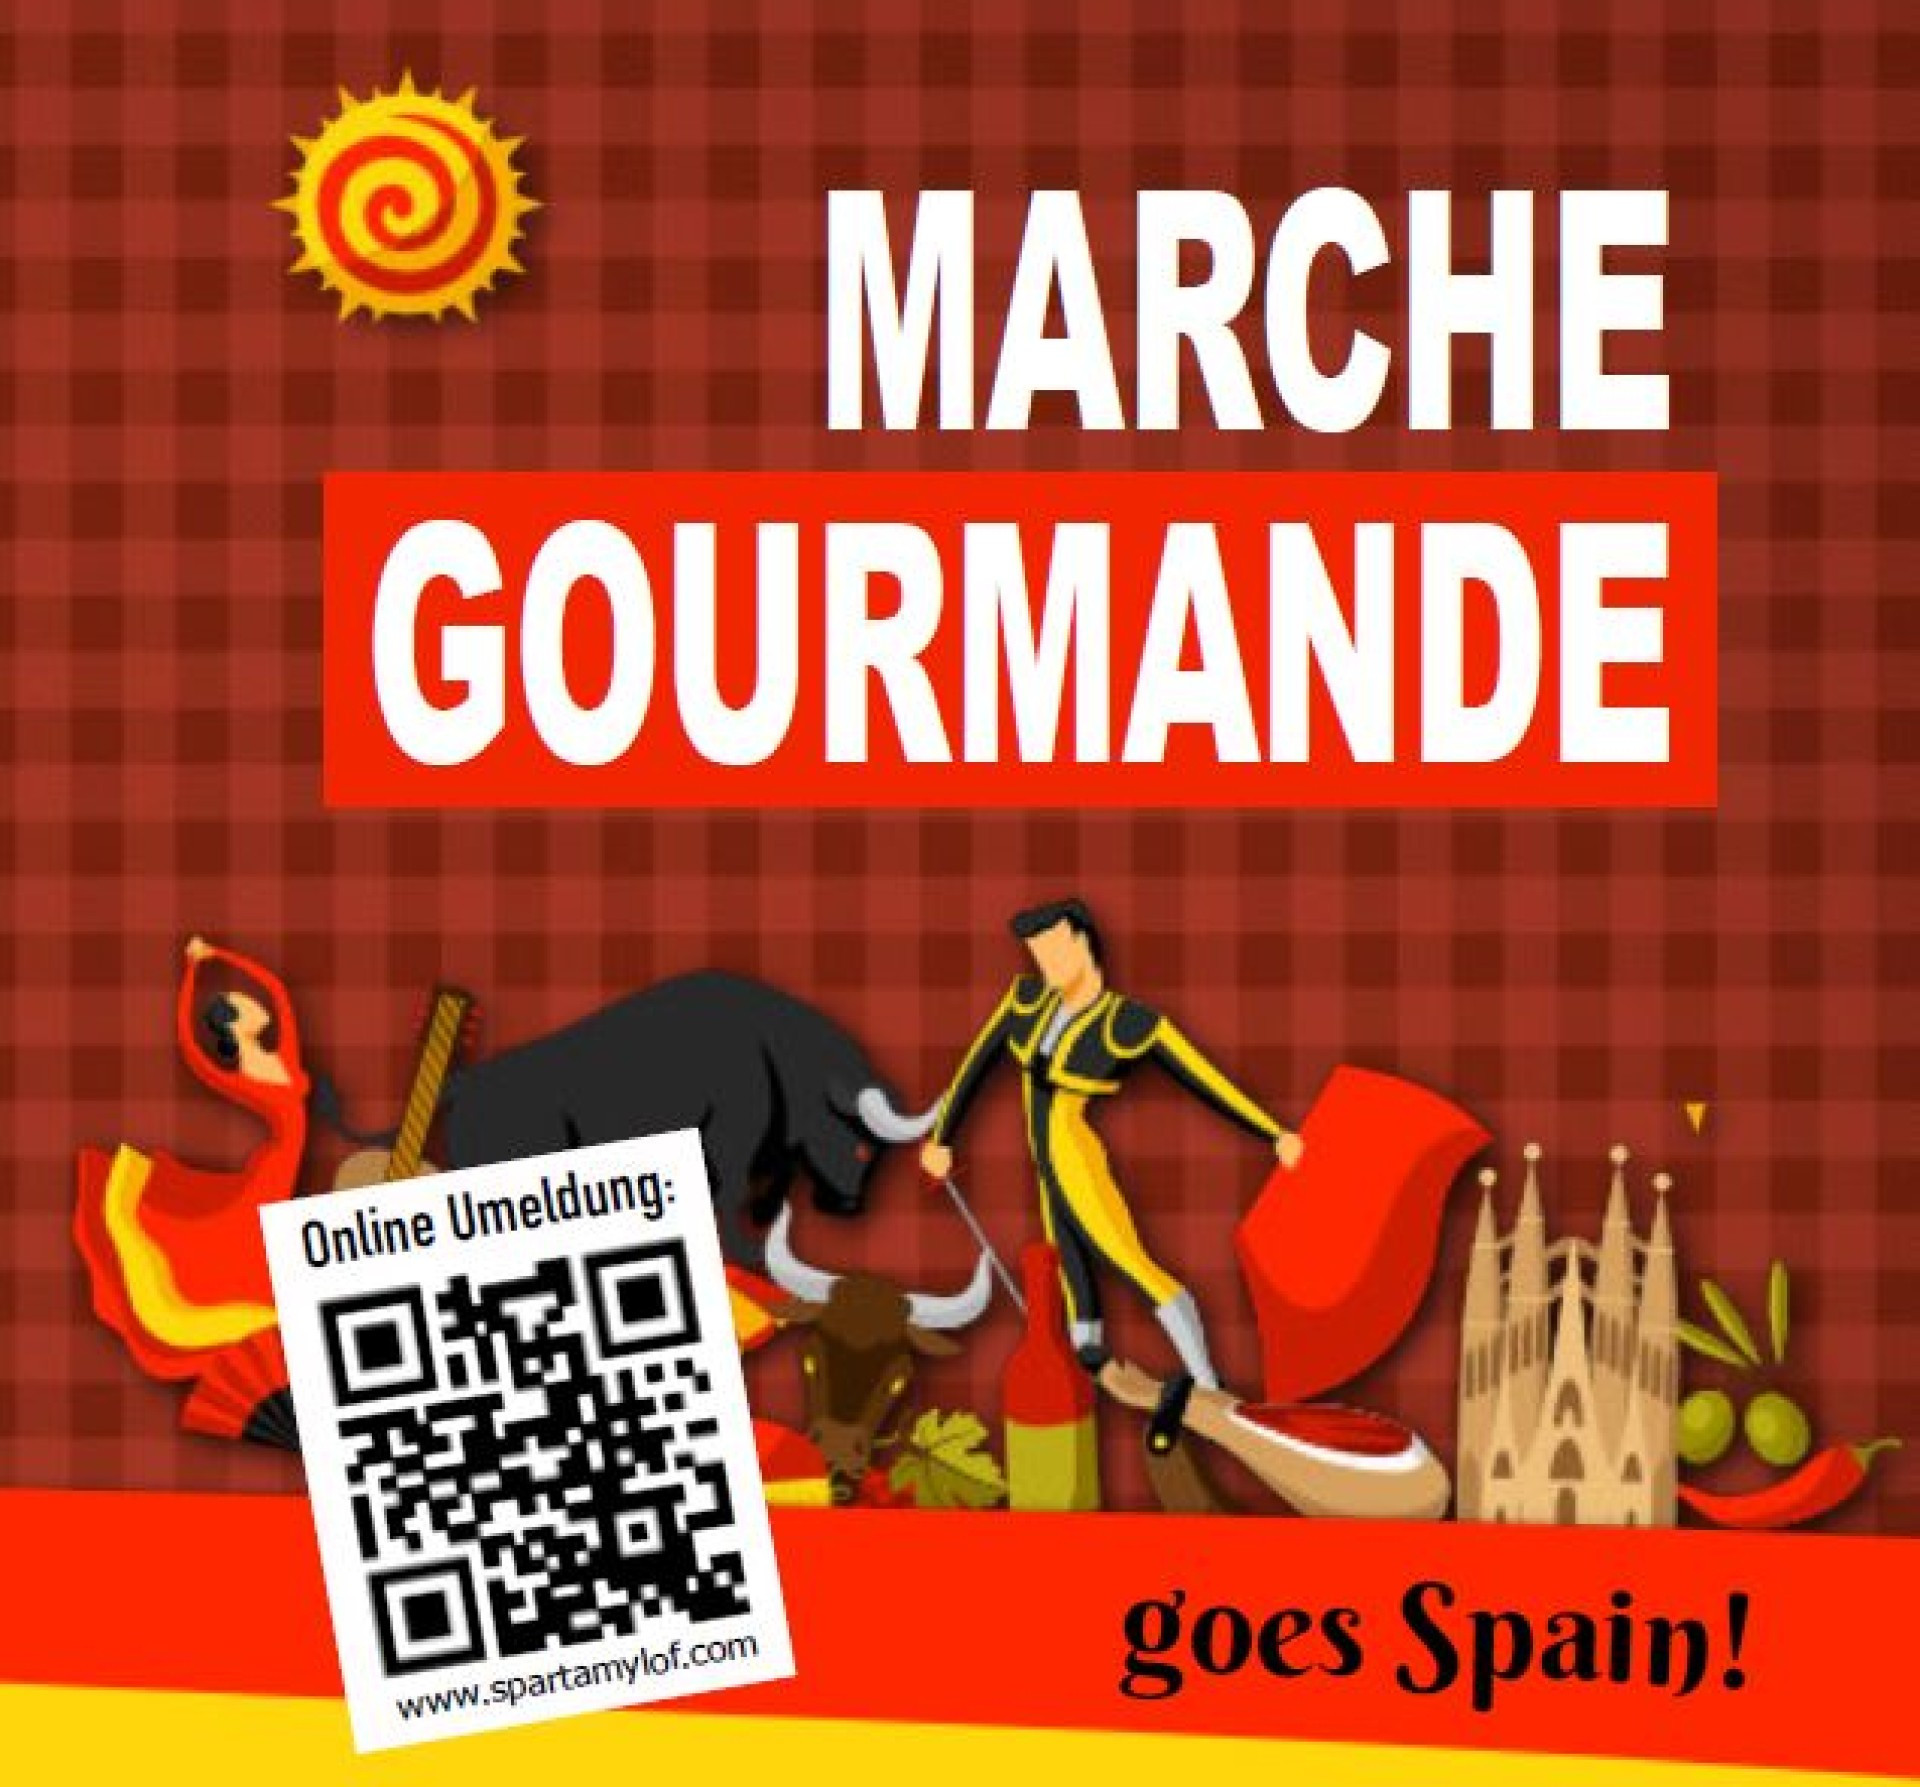 Marche gourmande: goes Spain!